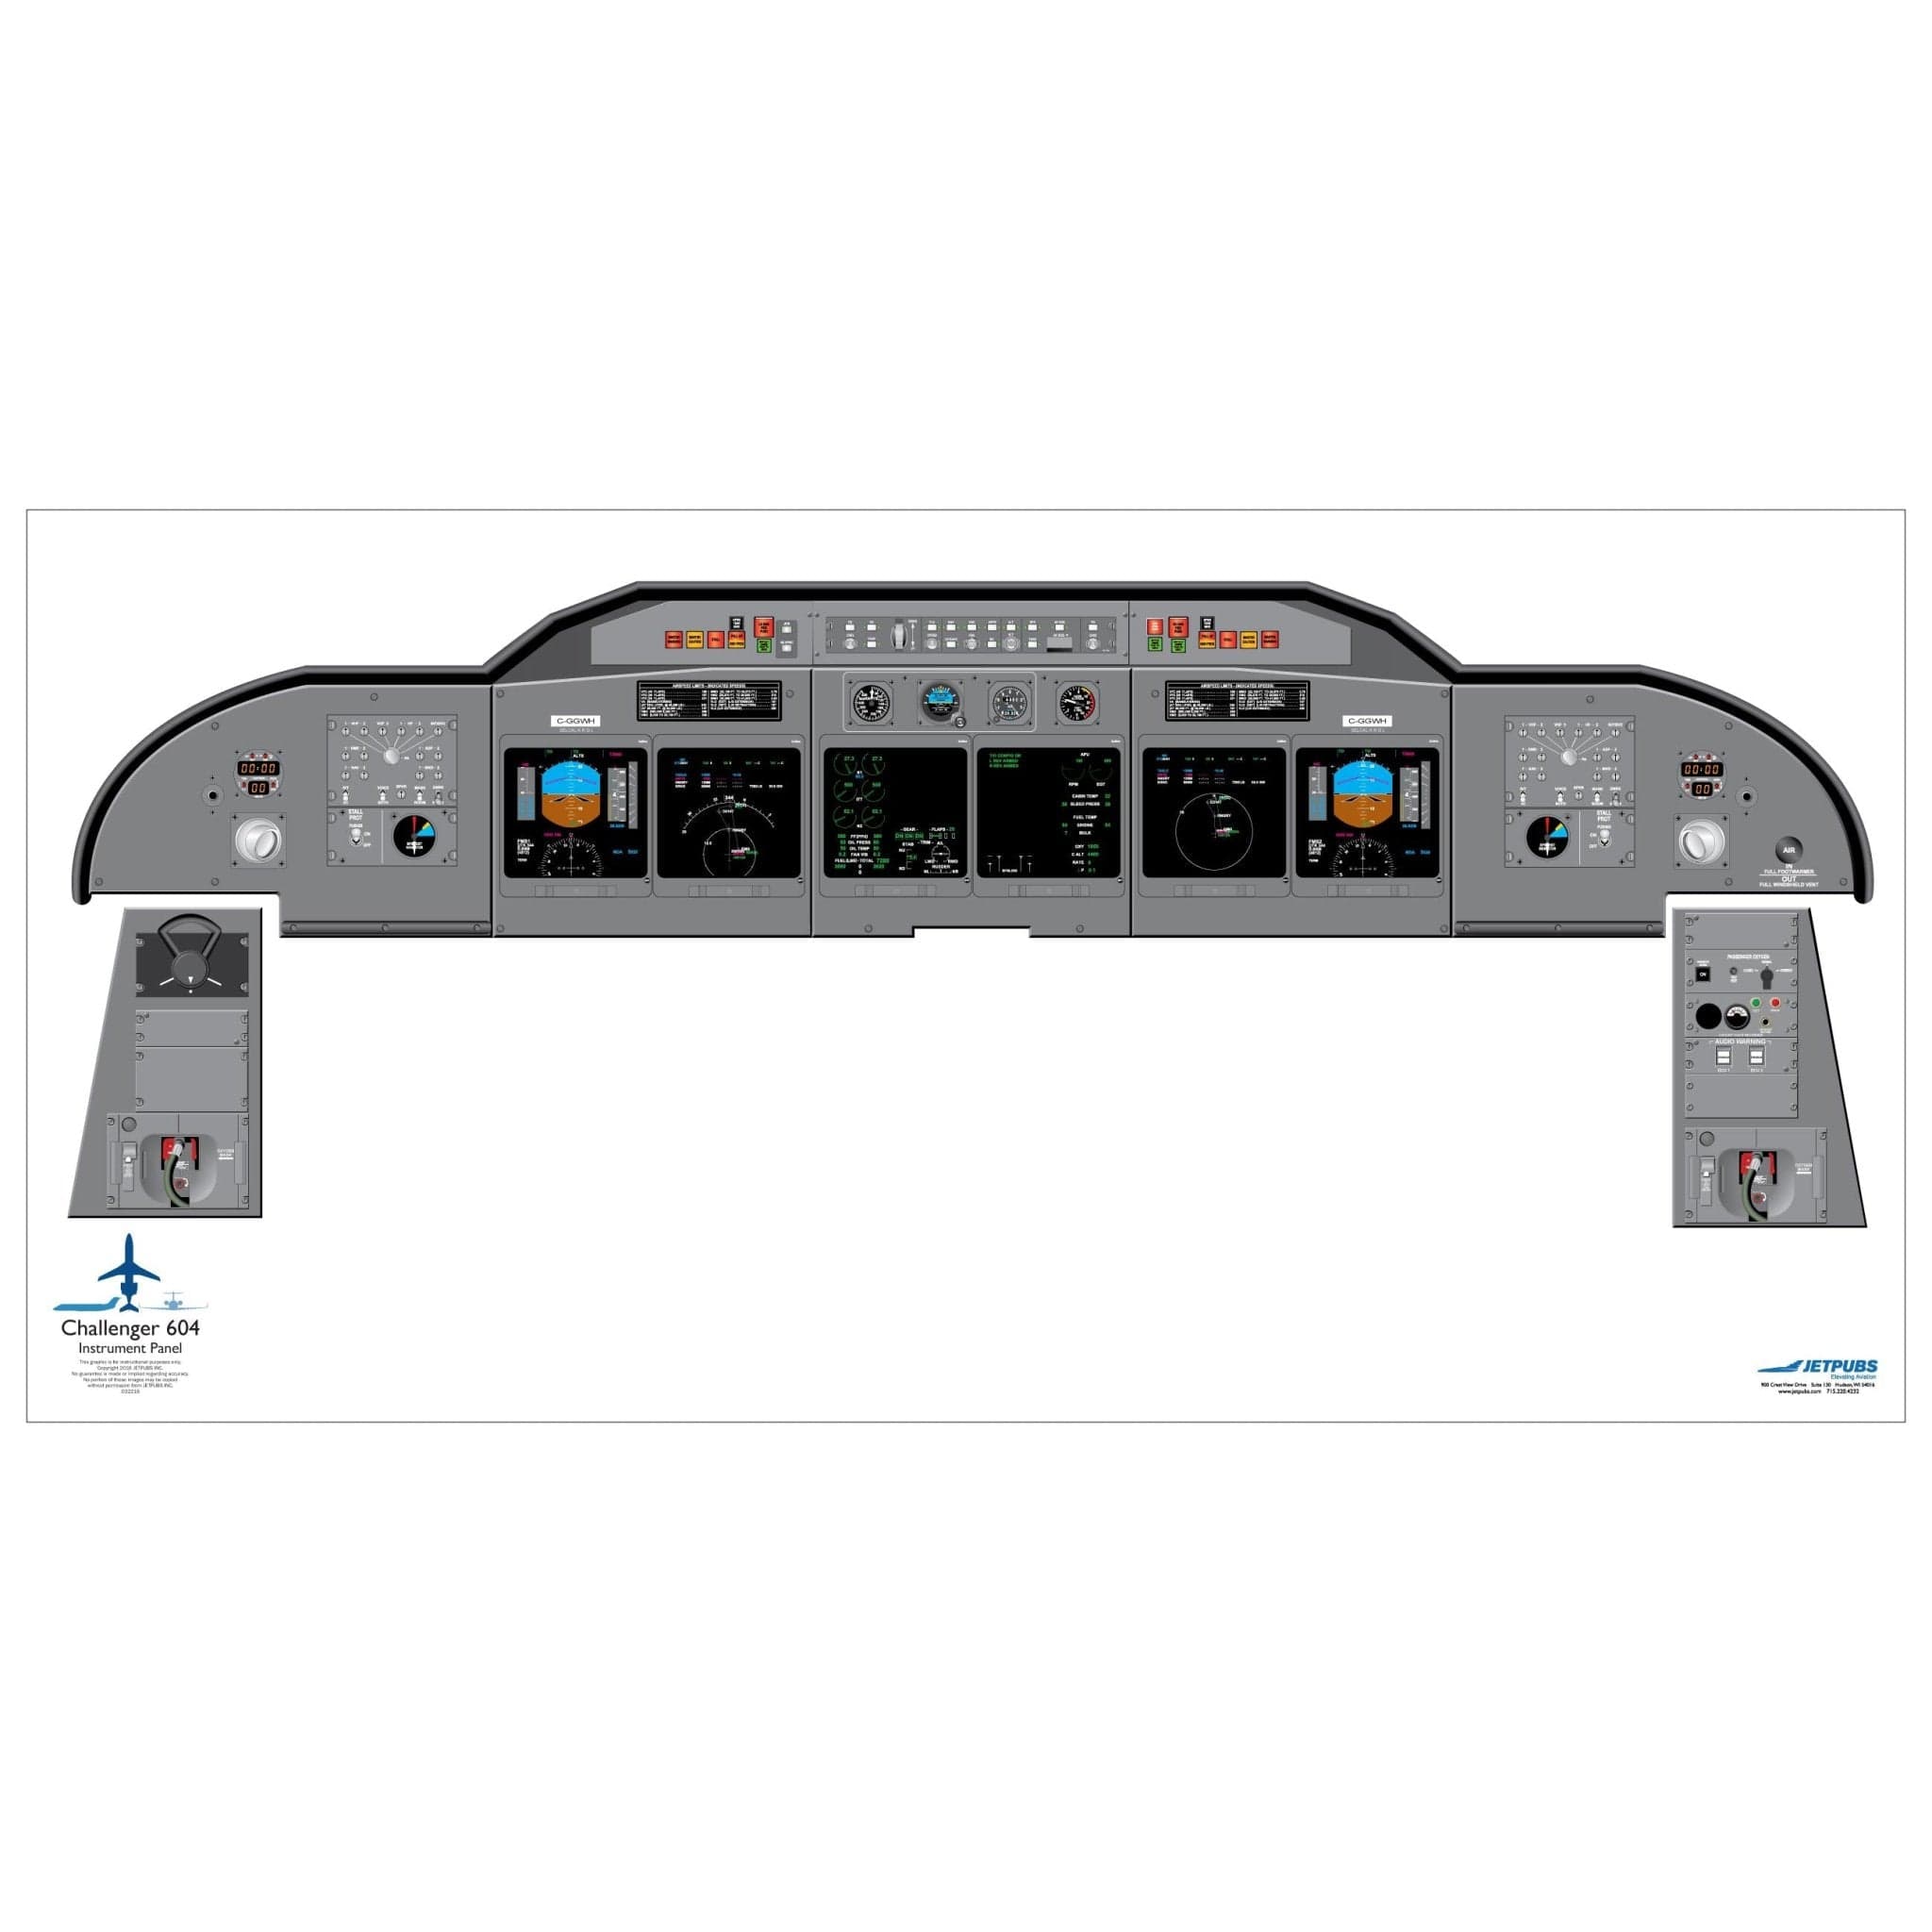 Bombardier 18" x 36" Cockpit Posters